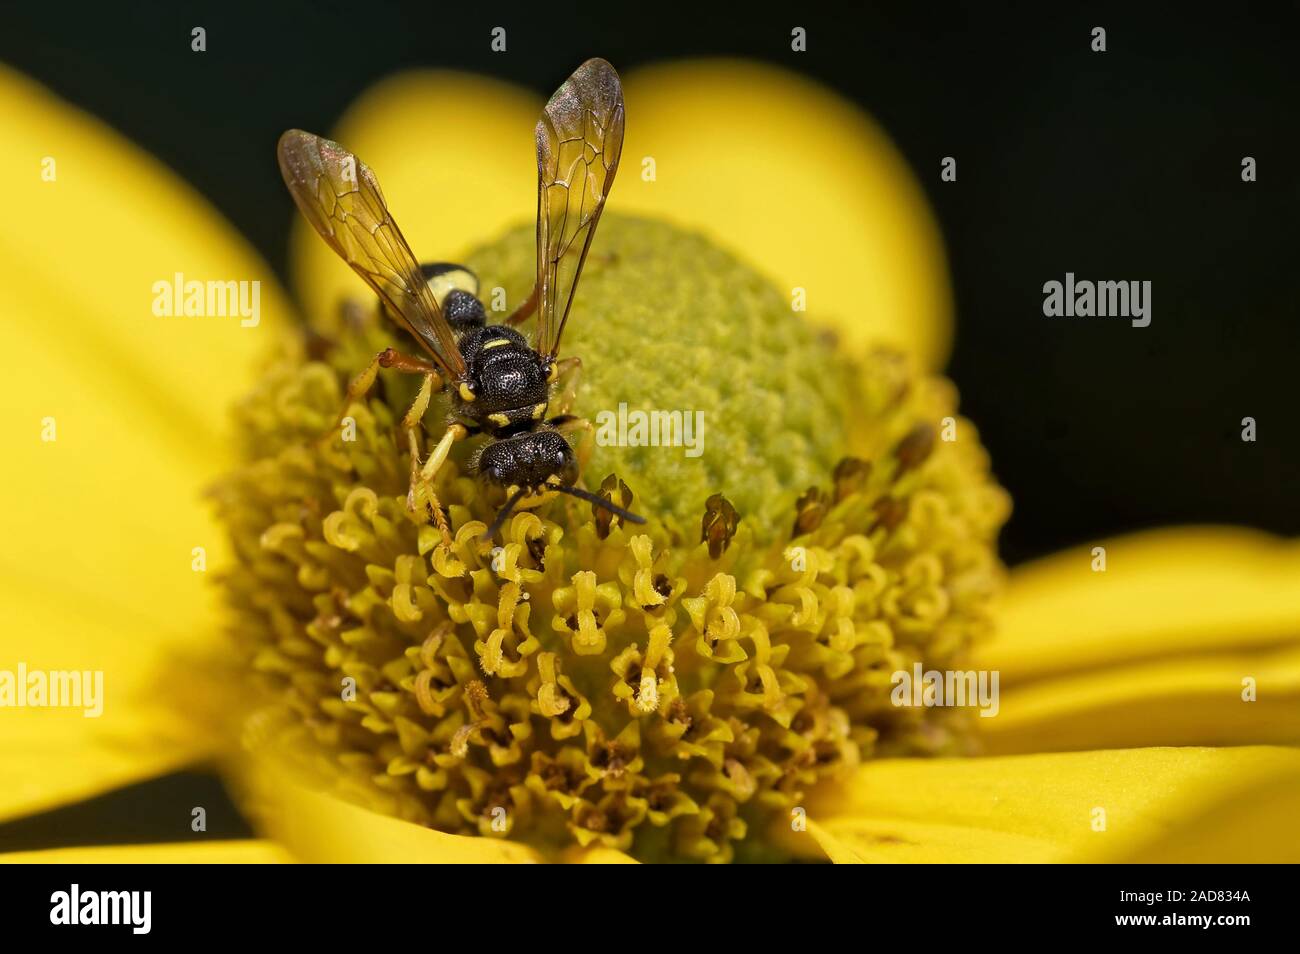 ornate tailed digger wasp Stock Photo